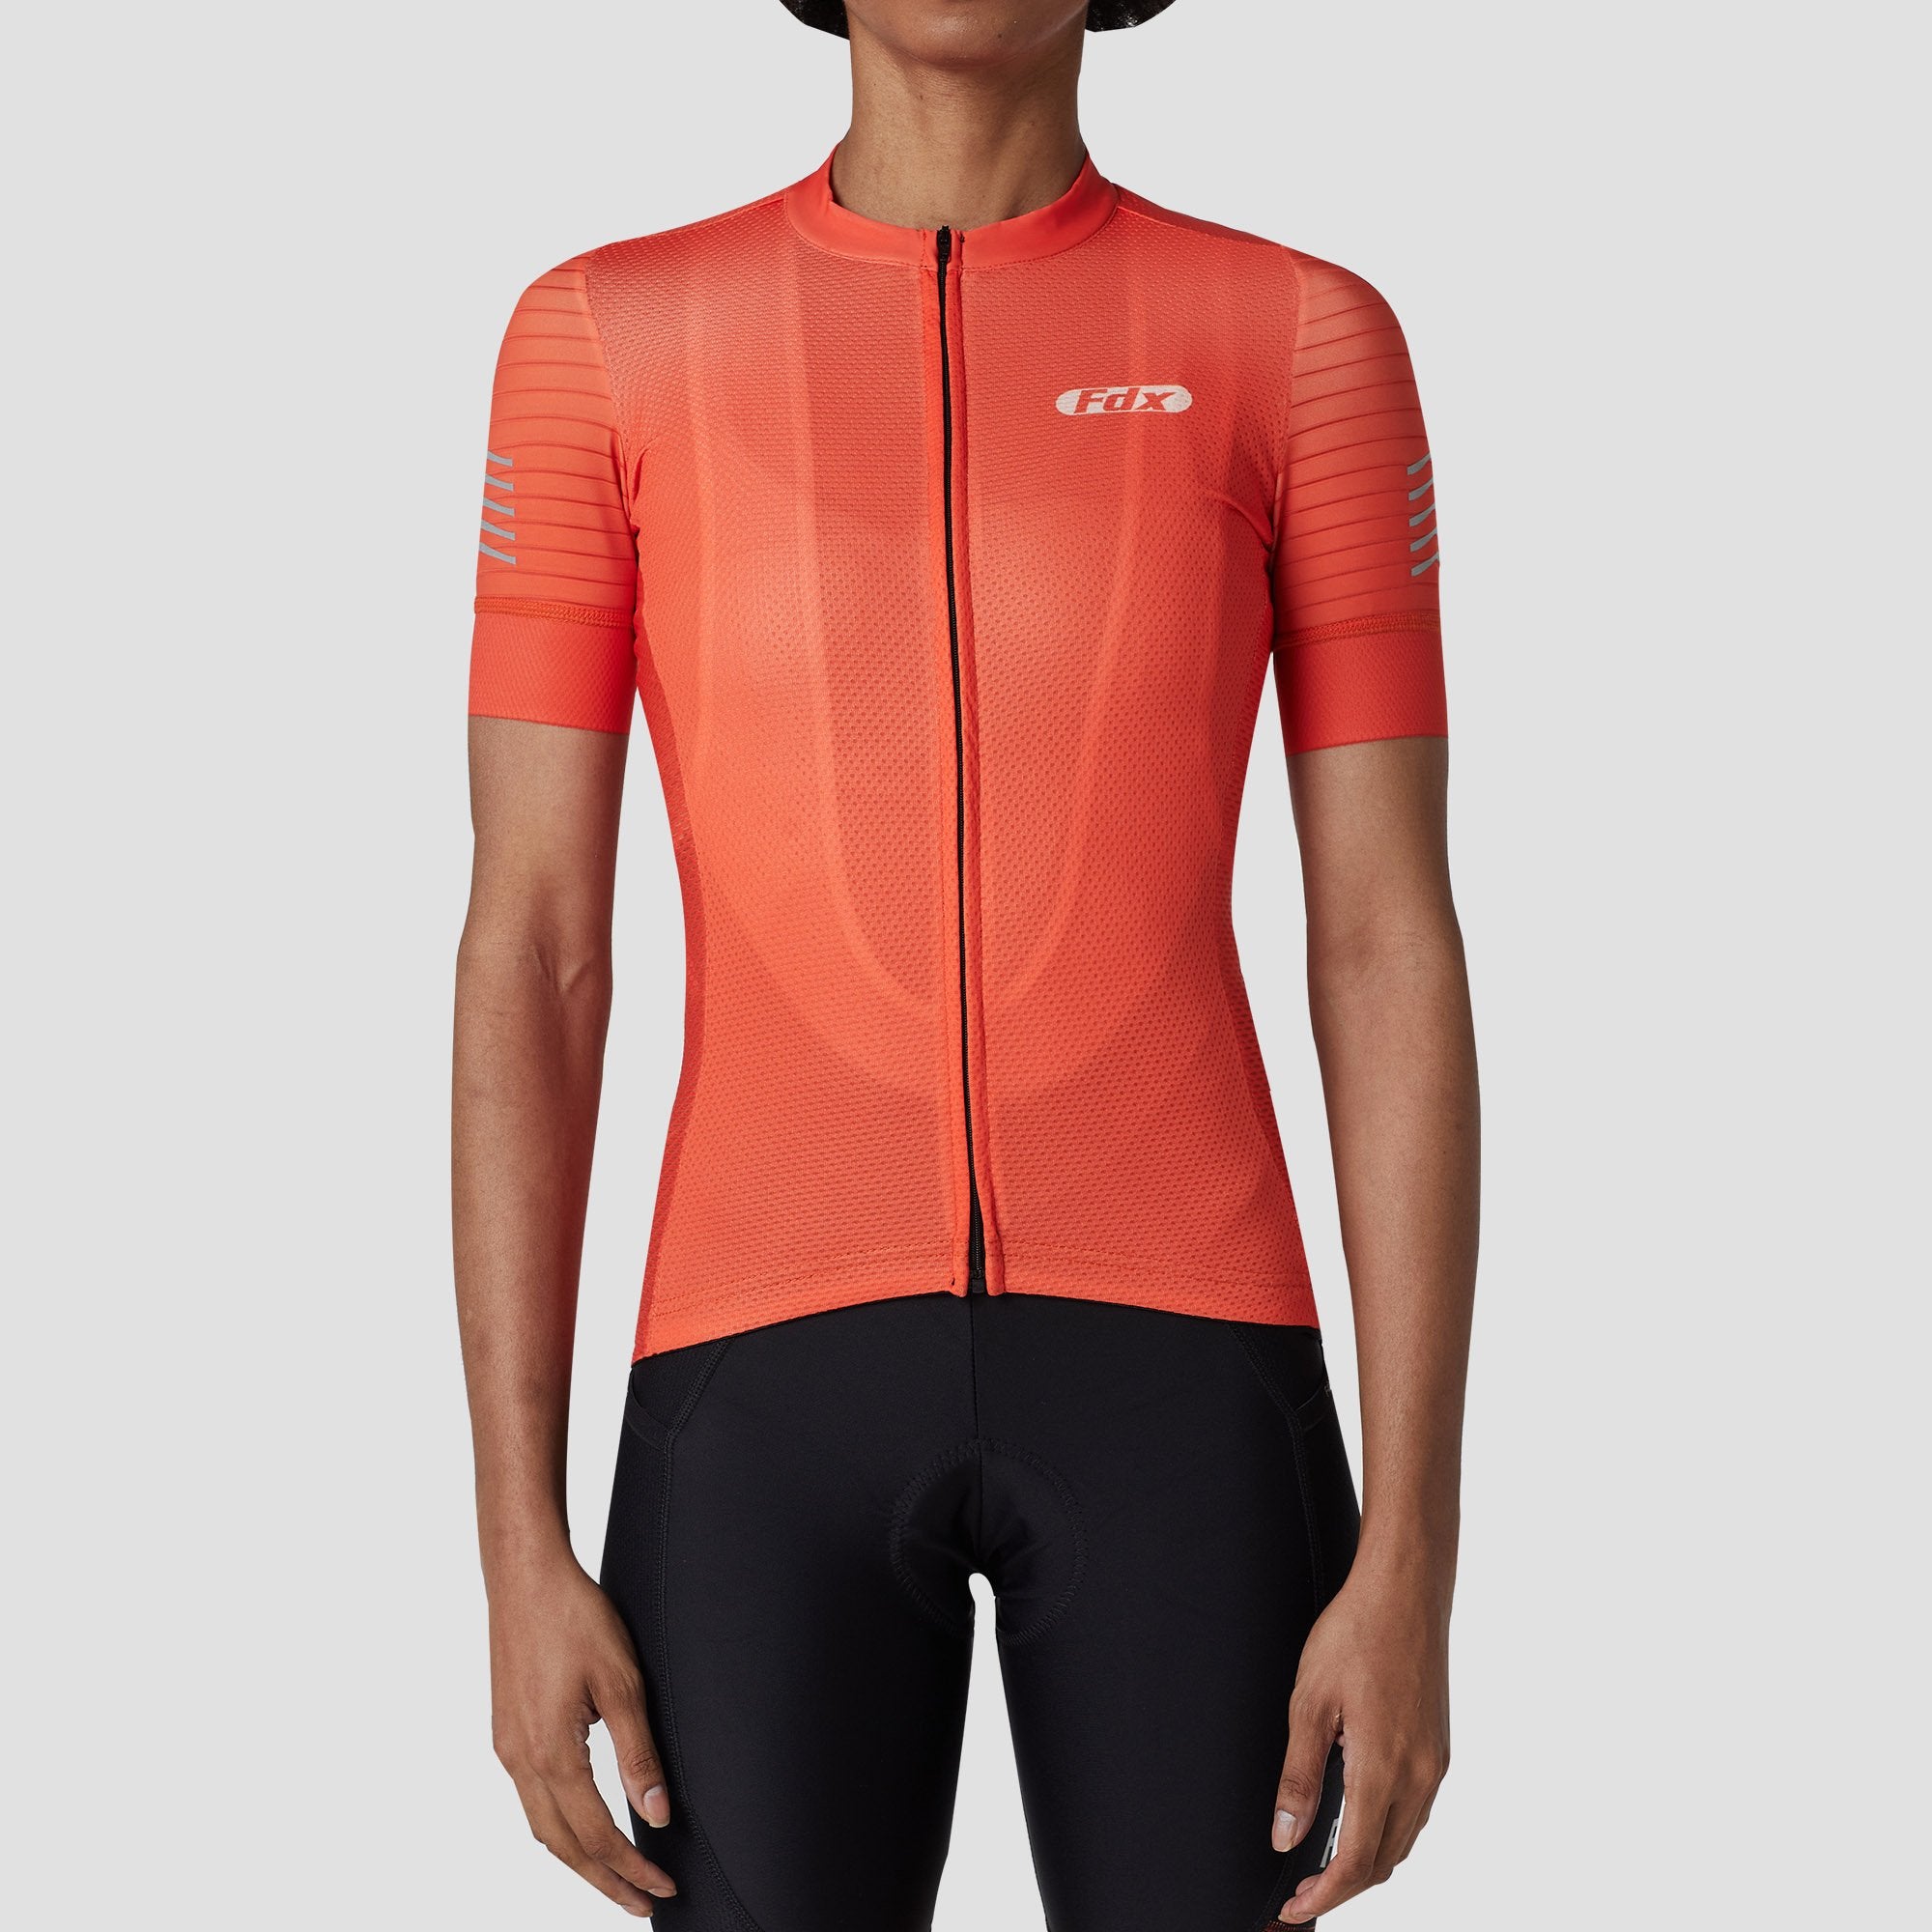 Fdx Womens Orange Short Sleeve Cycling Jersey for Summer Best Road Bike Wear Top Light Weight, Full Zipper, Pockets & Hi-viz Reflectors - Essential